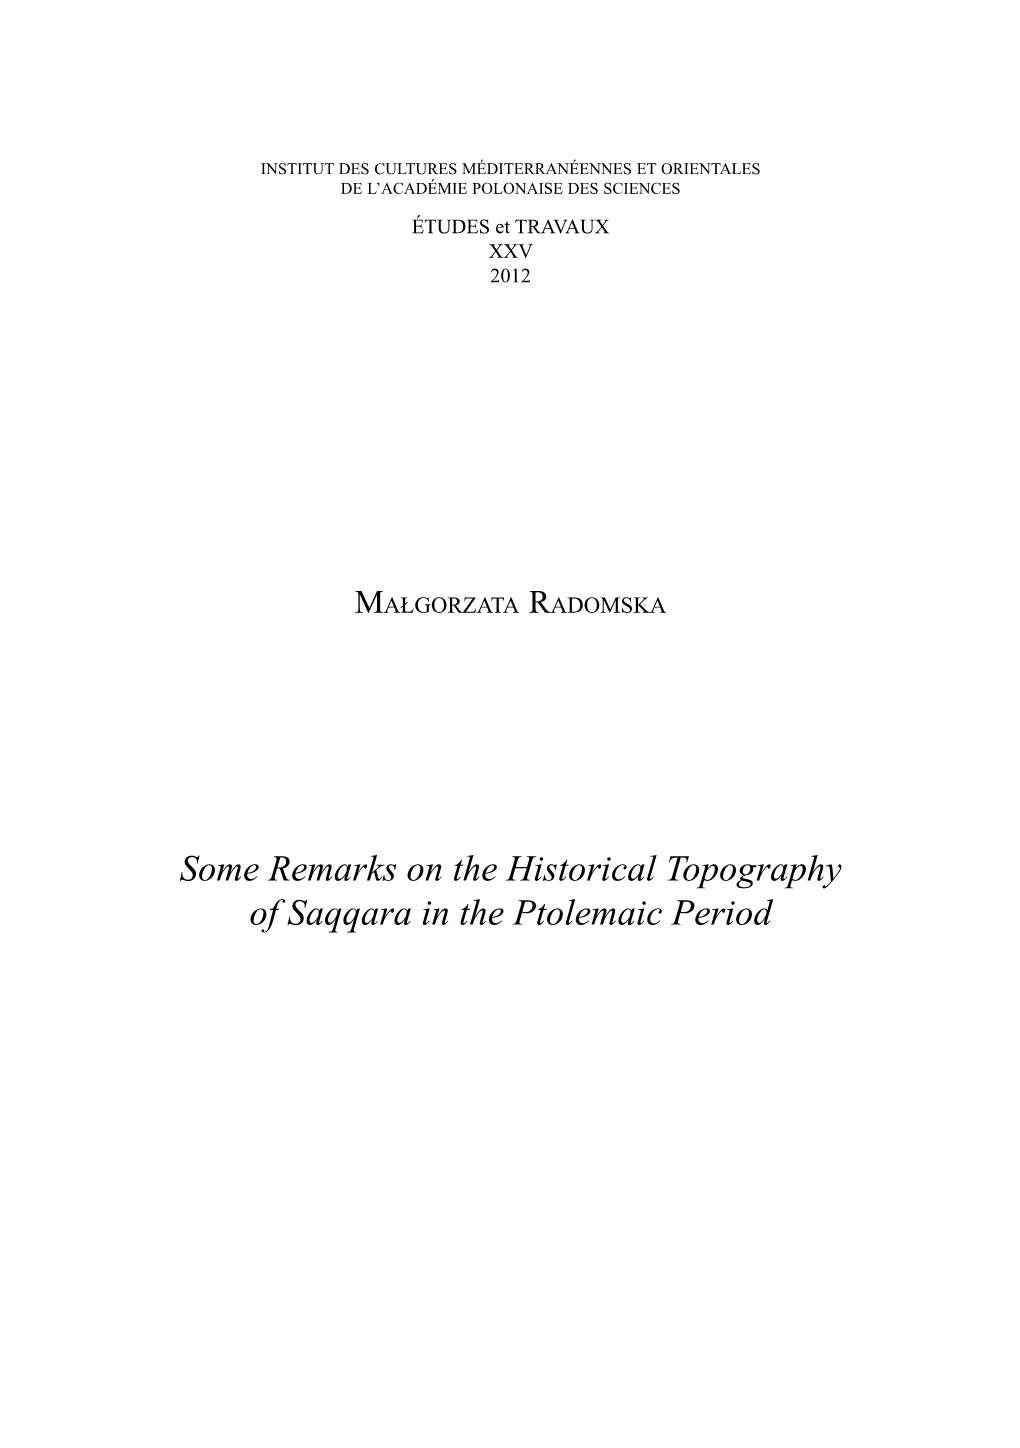 Some Remarks on the Historical Topography of Saqqara in the Ptolemaic Period 340 MAŁGORZATA RADOMSKA